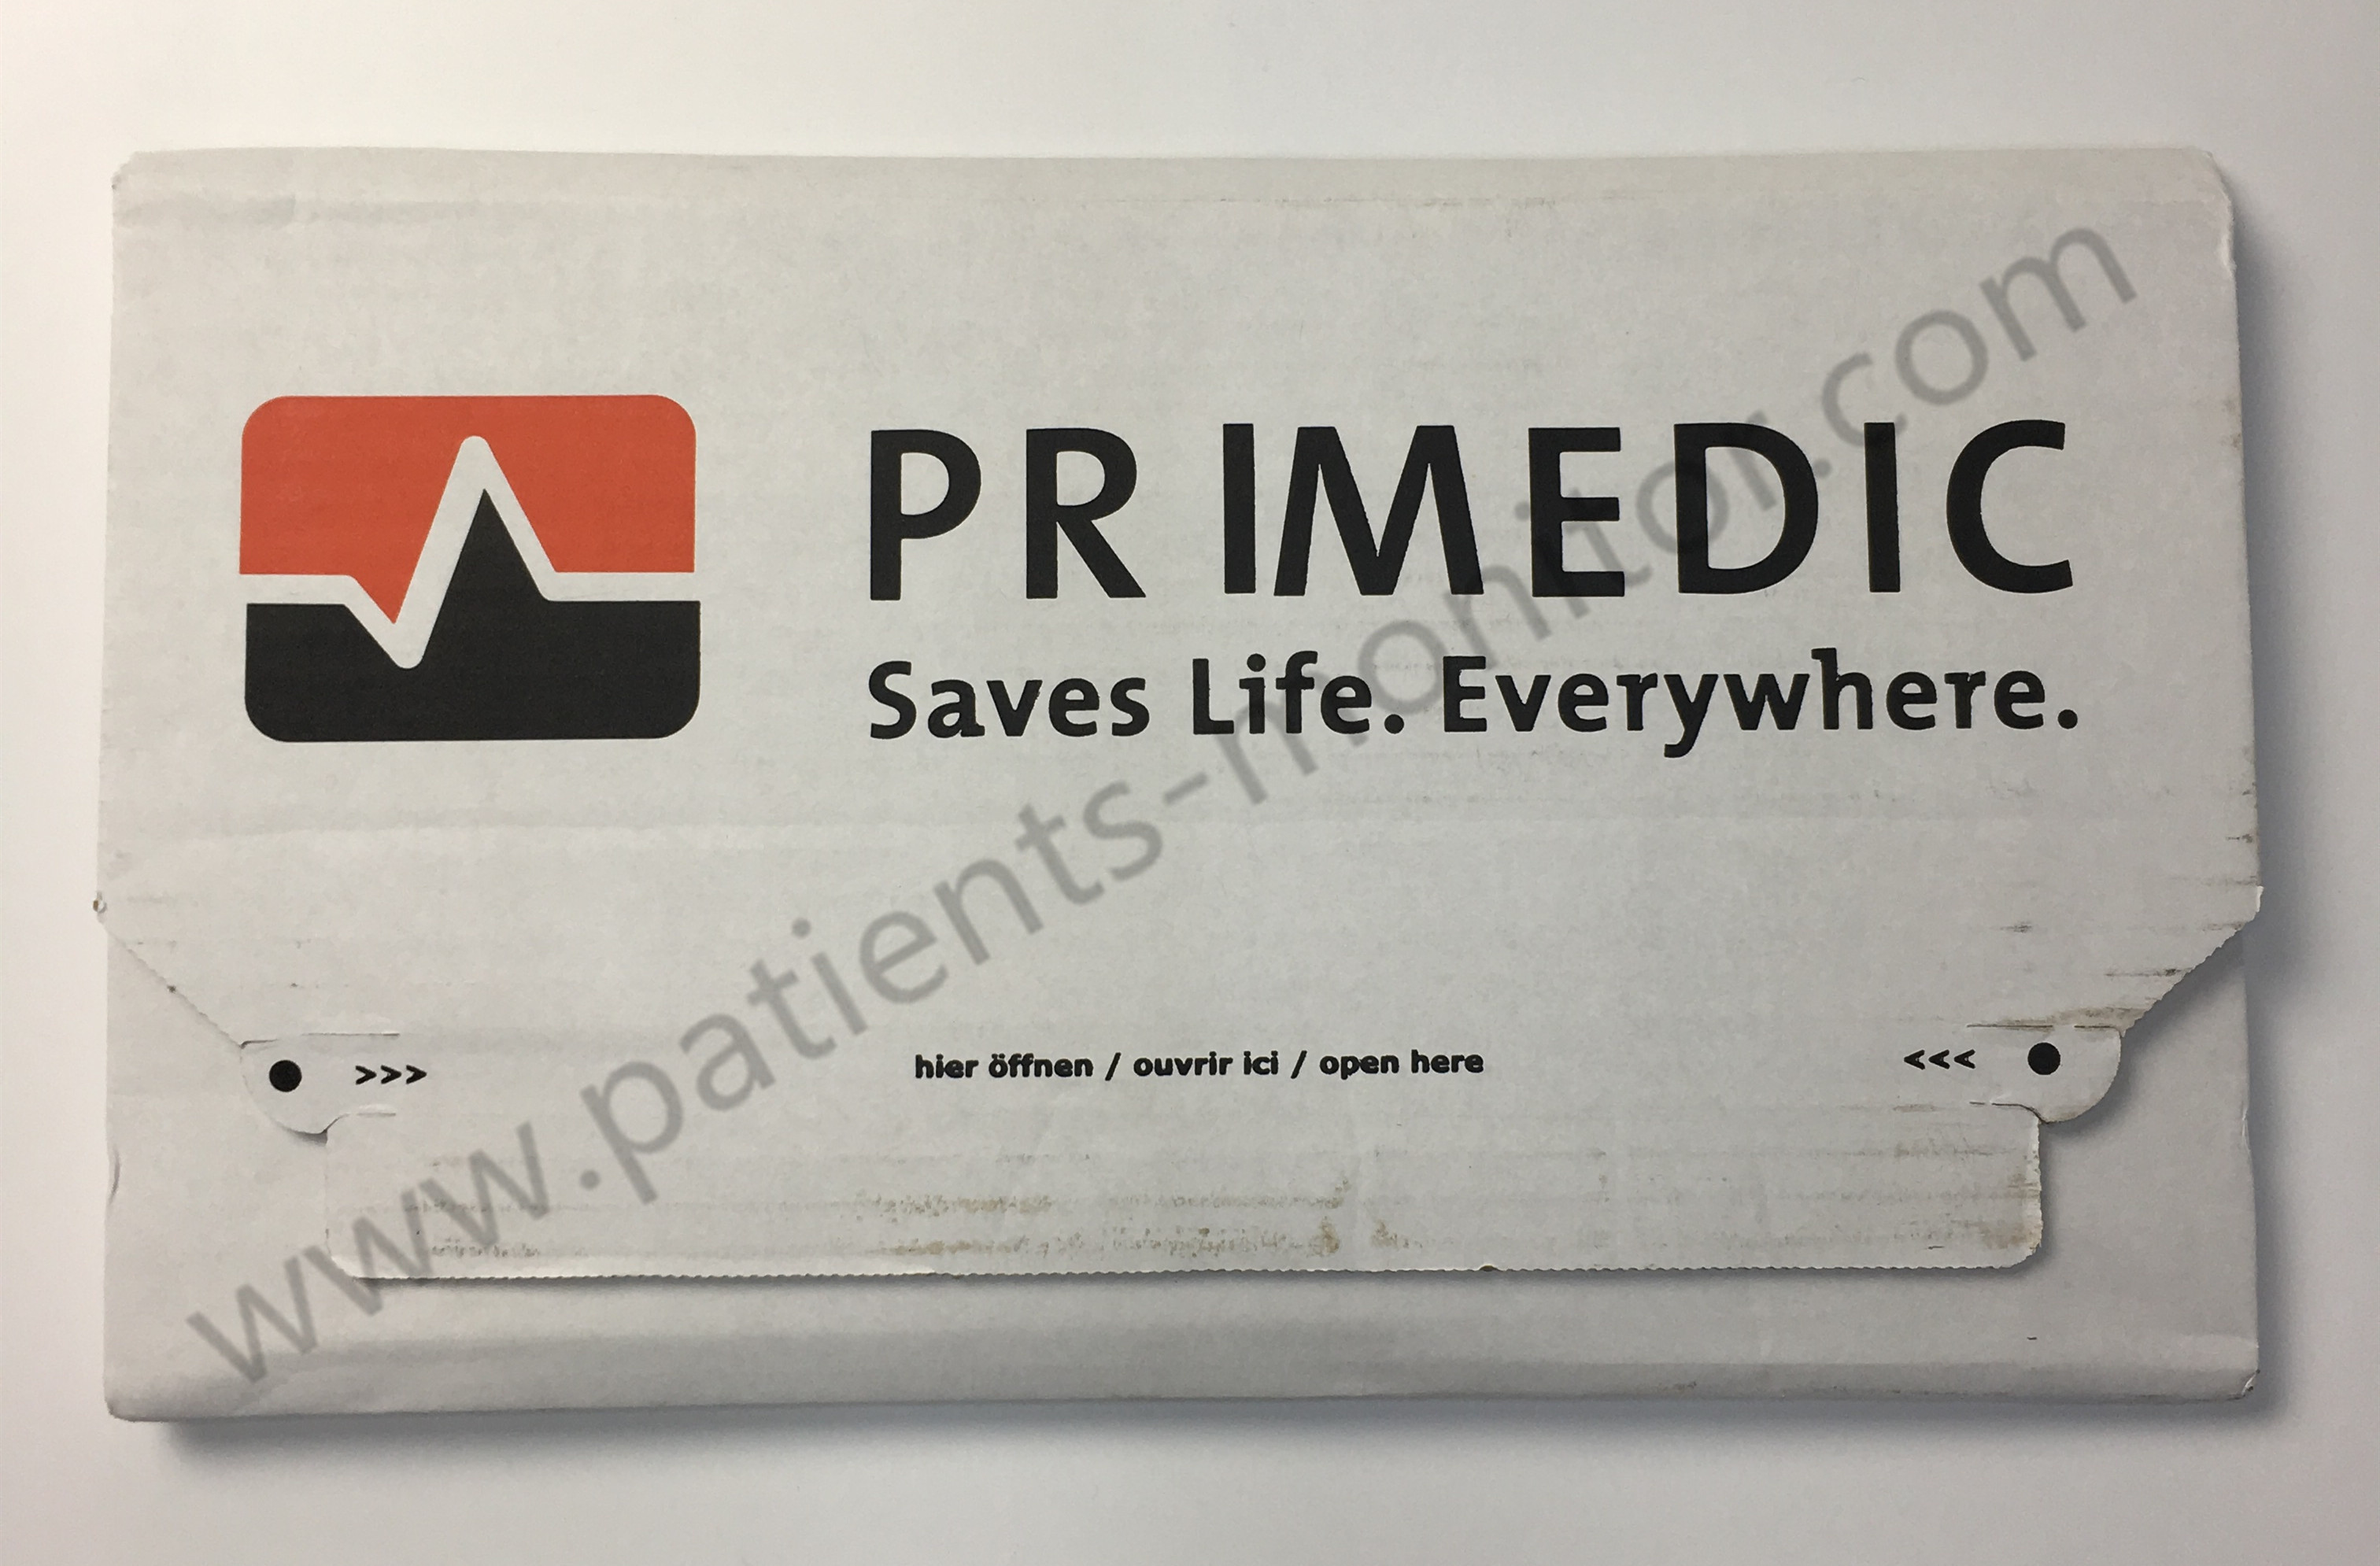  Metrax Primedic Multifunction Defibrillator Electrodes 97796 SavePads For AED Defibrillator 96389 Manufactures